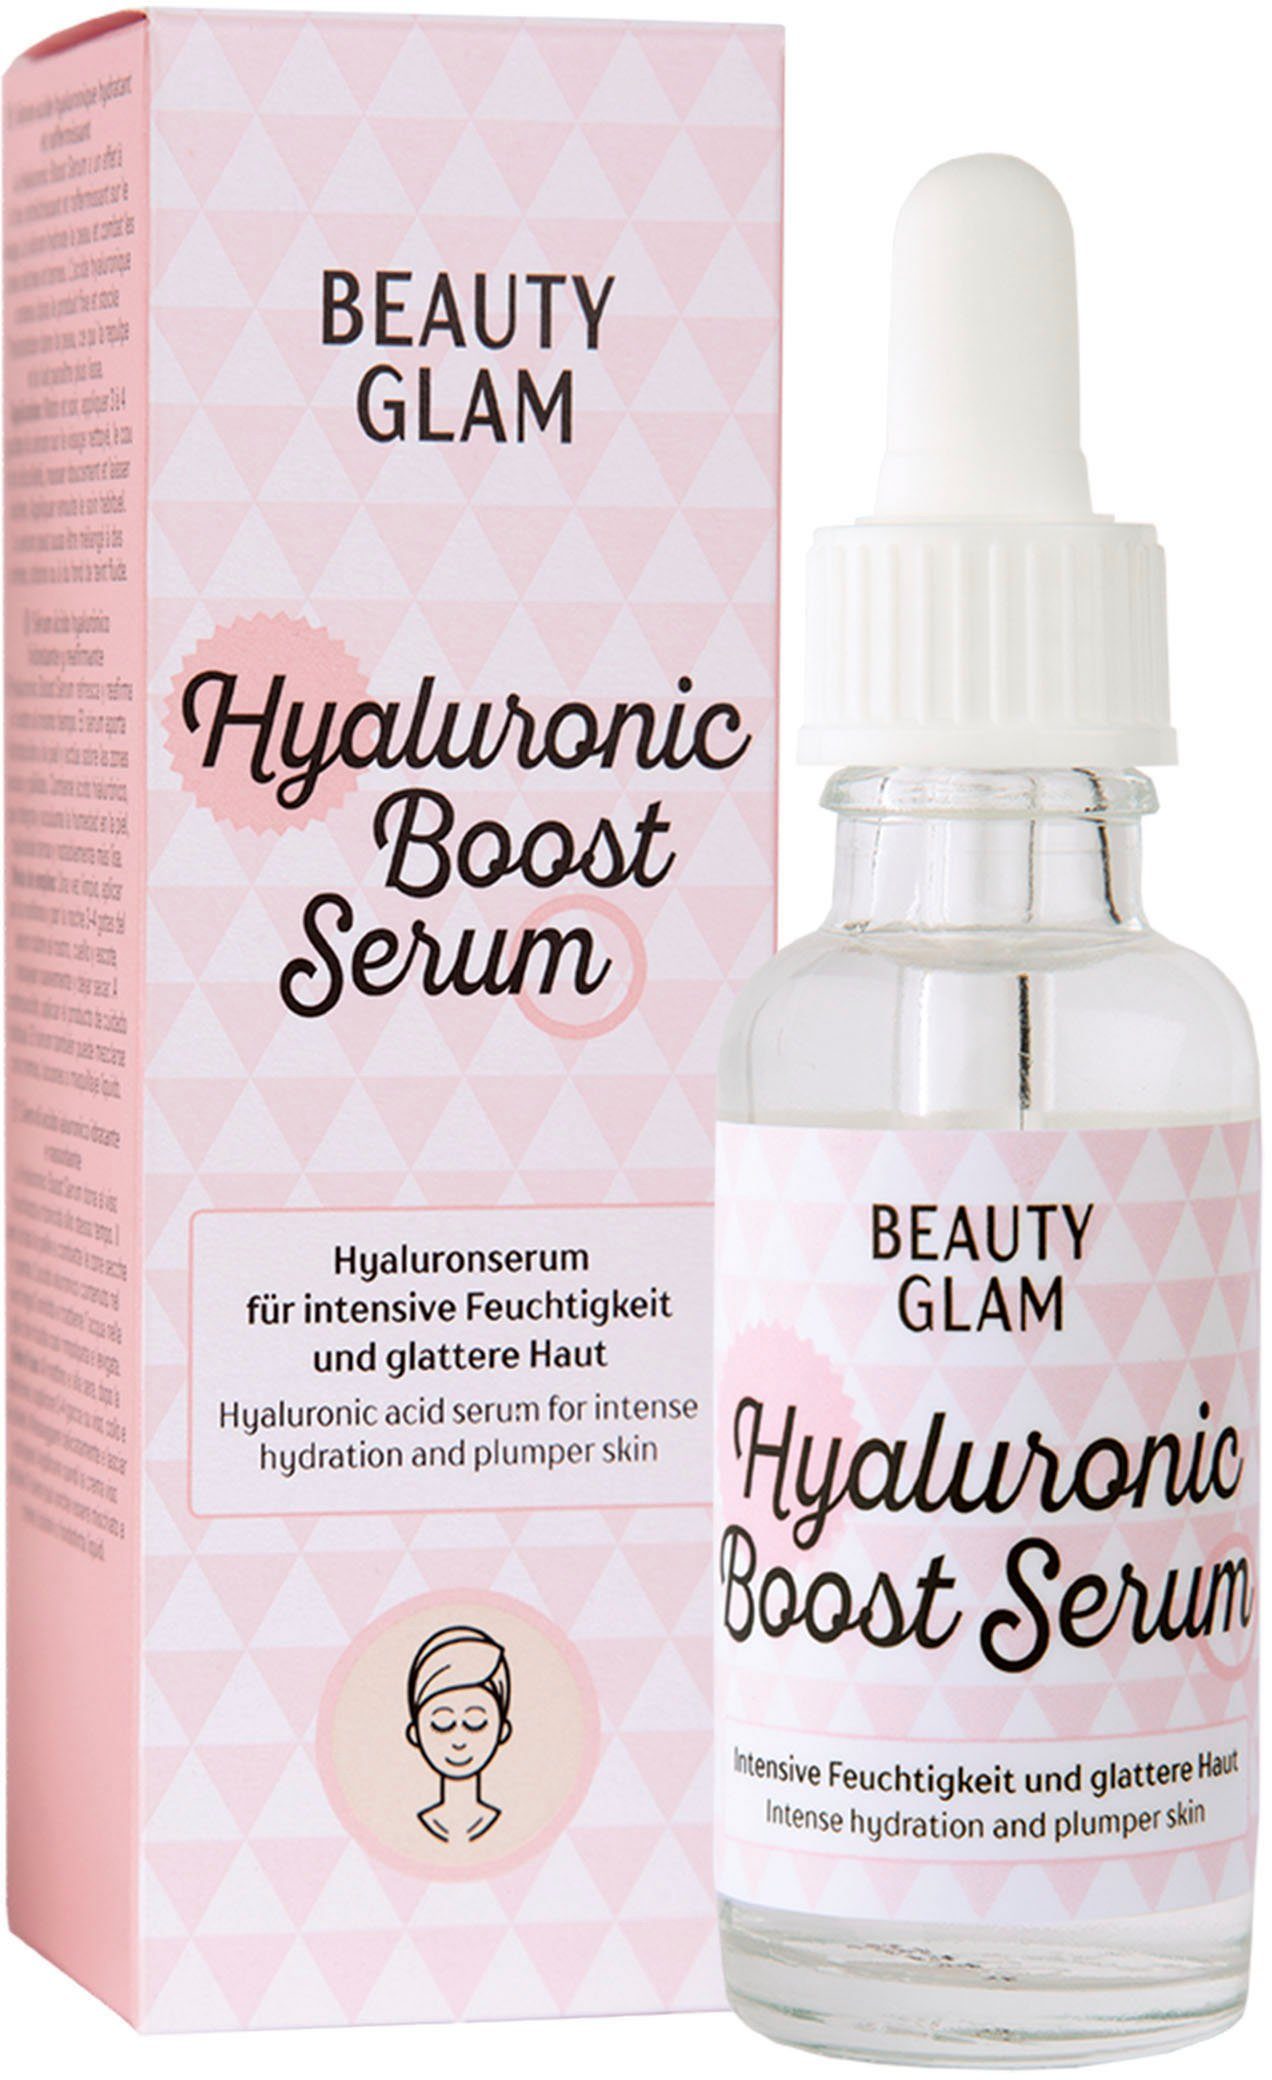 GLAM Serum BEAUTY Beauty Hyaluronic Glam Boost Gesichtsserum